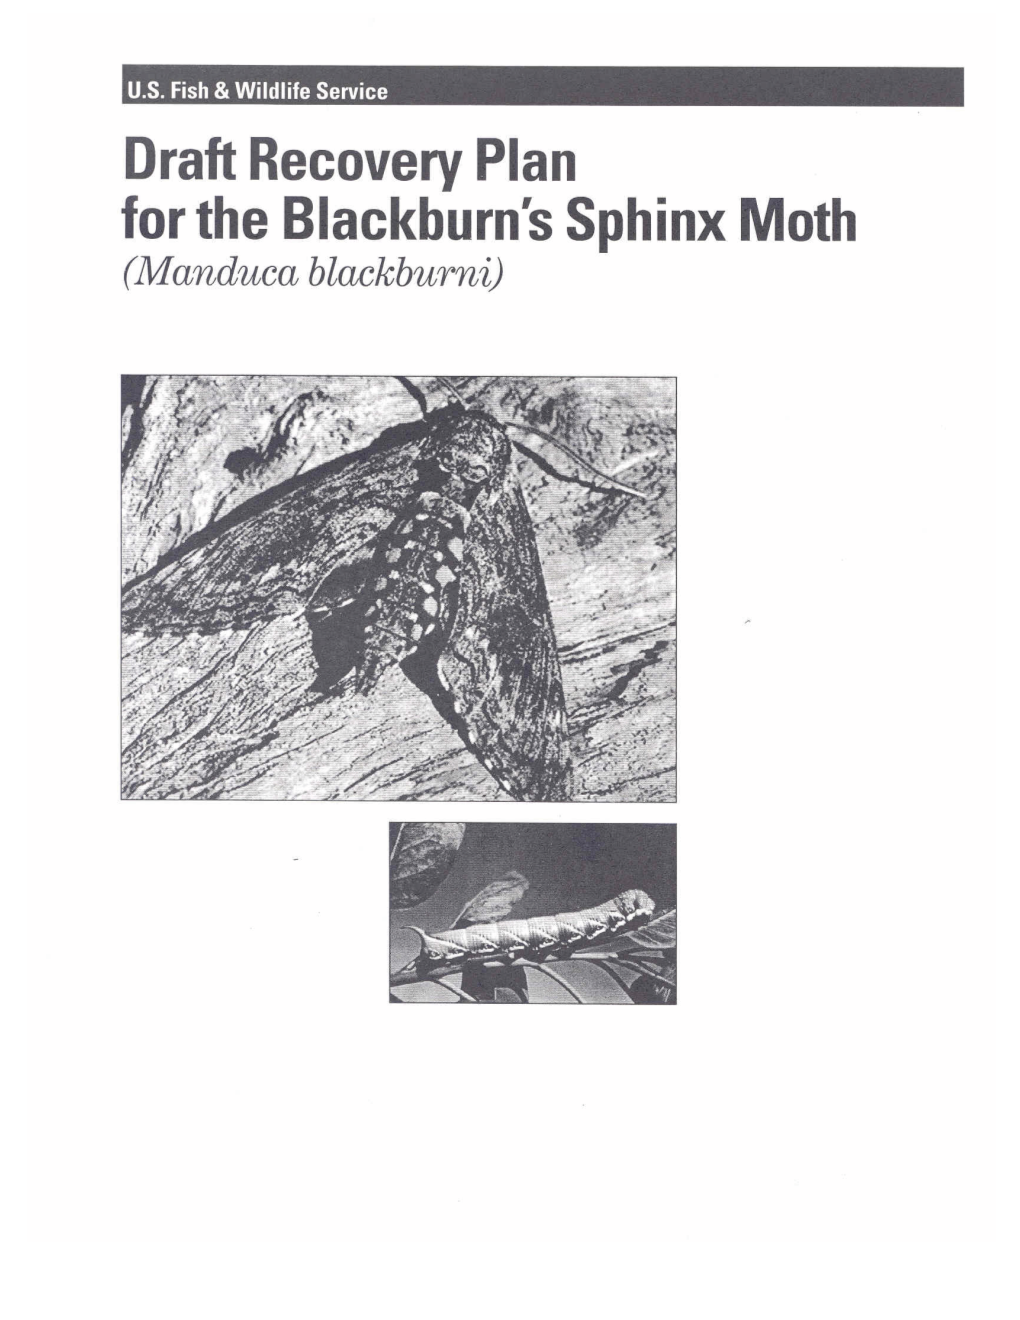 Recovery Plan for Blackburn's Sphinx Moth